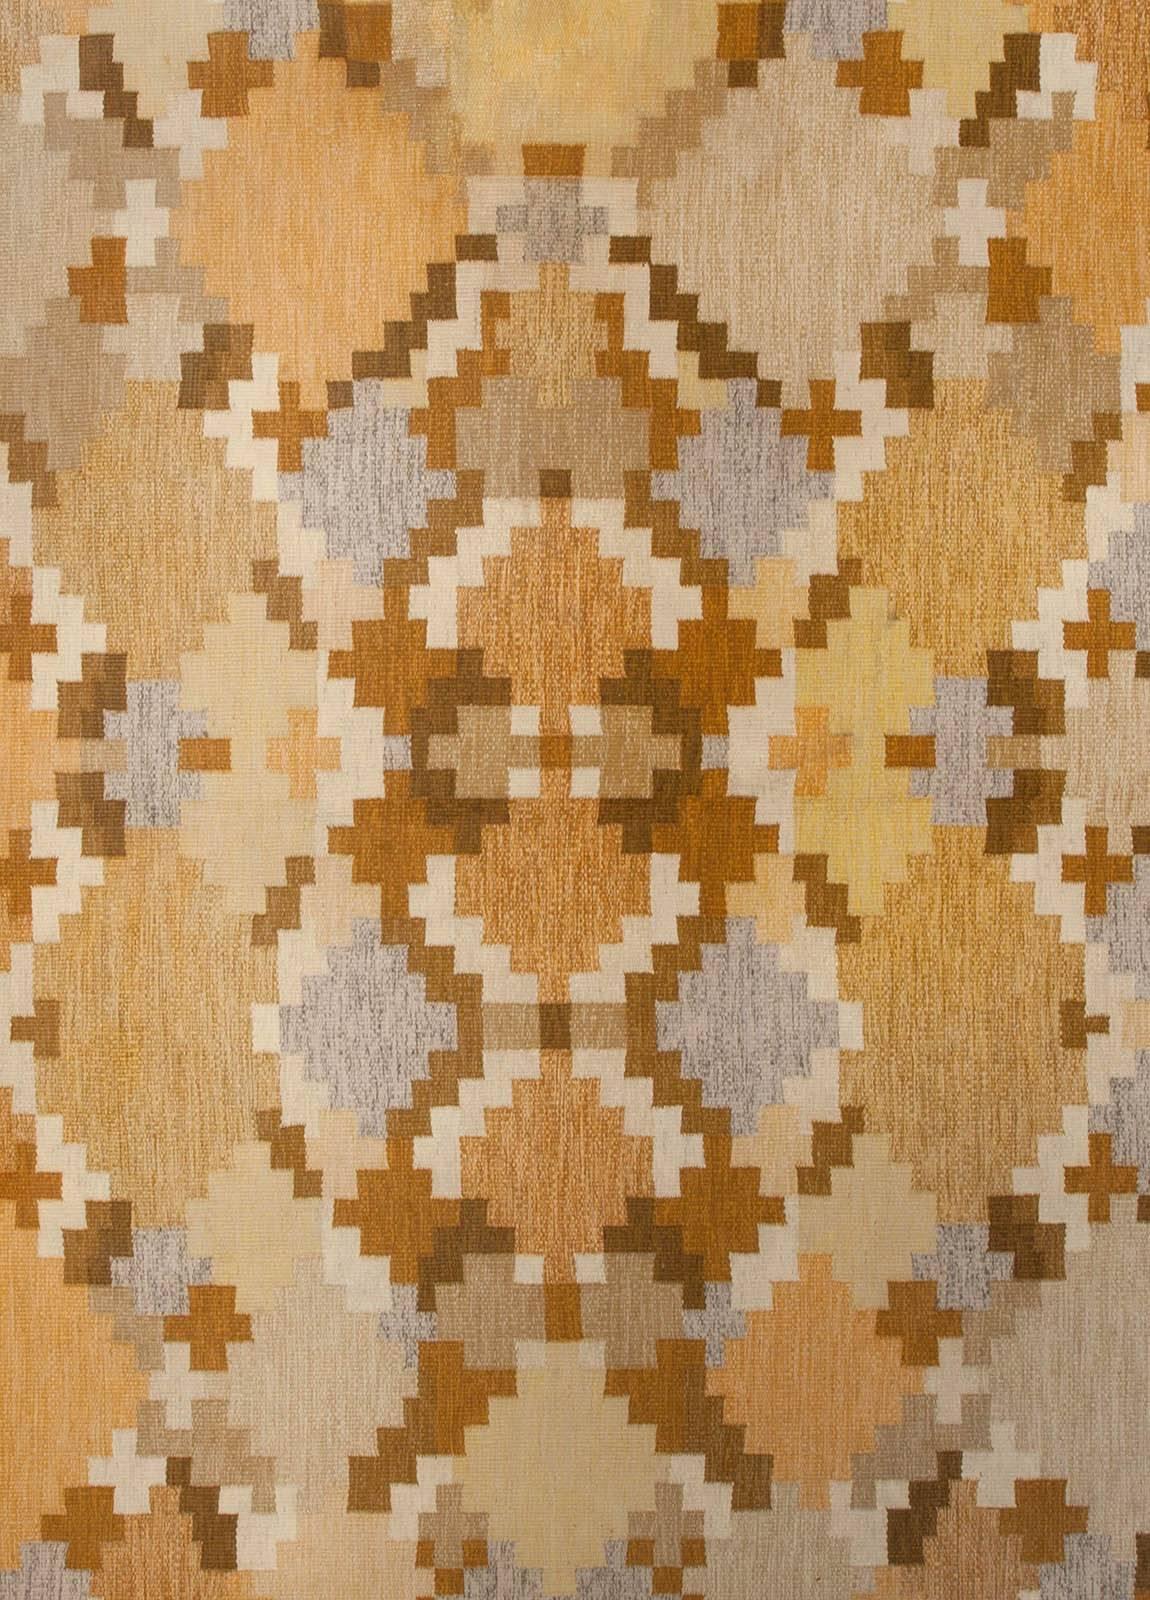 Mid-20th century Swedish Brown Flat-Weave Rug by Ingrid Silow at Doris Leslie Blau
Size: 10'10